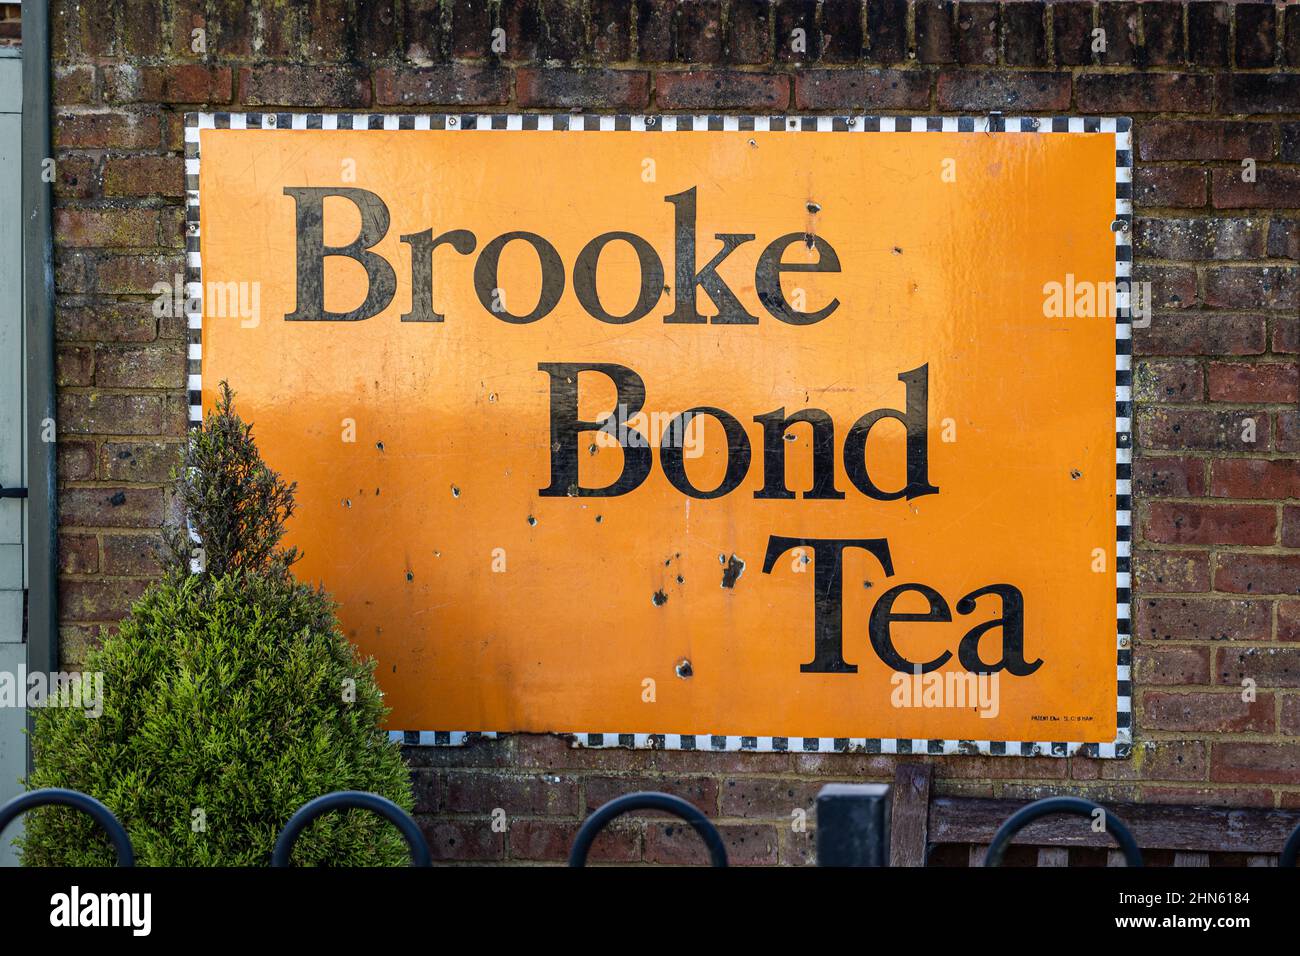 Brooke Bond Tea sign on a wall At Ebley Wharf, Stroud, UK Stock Photo